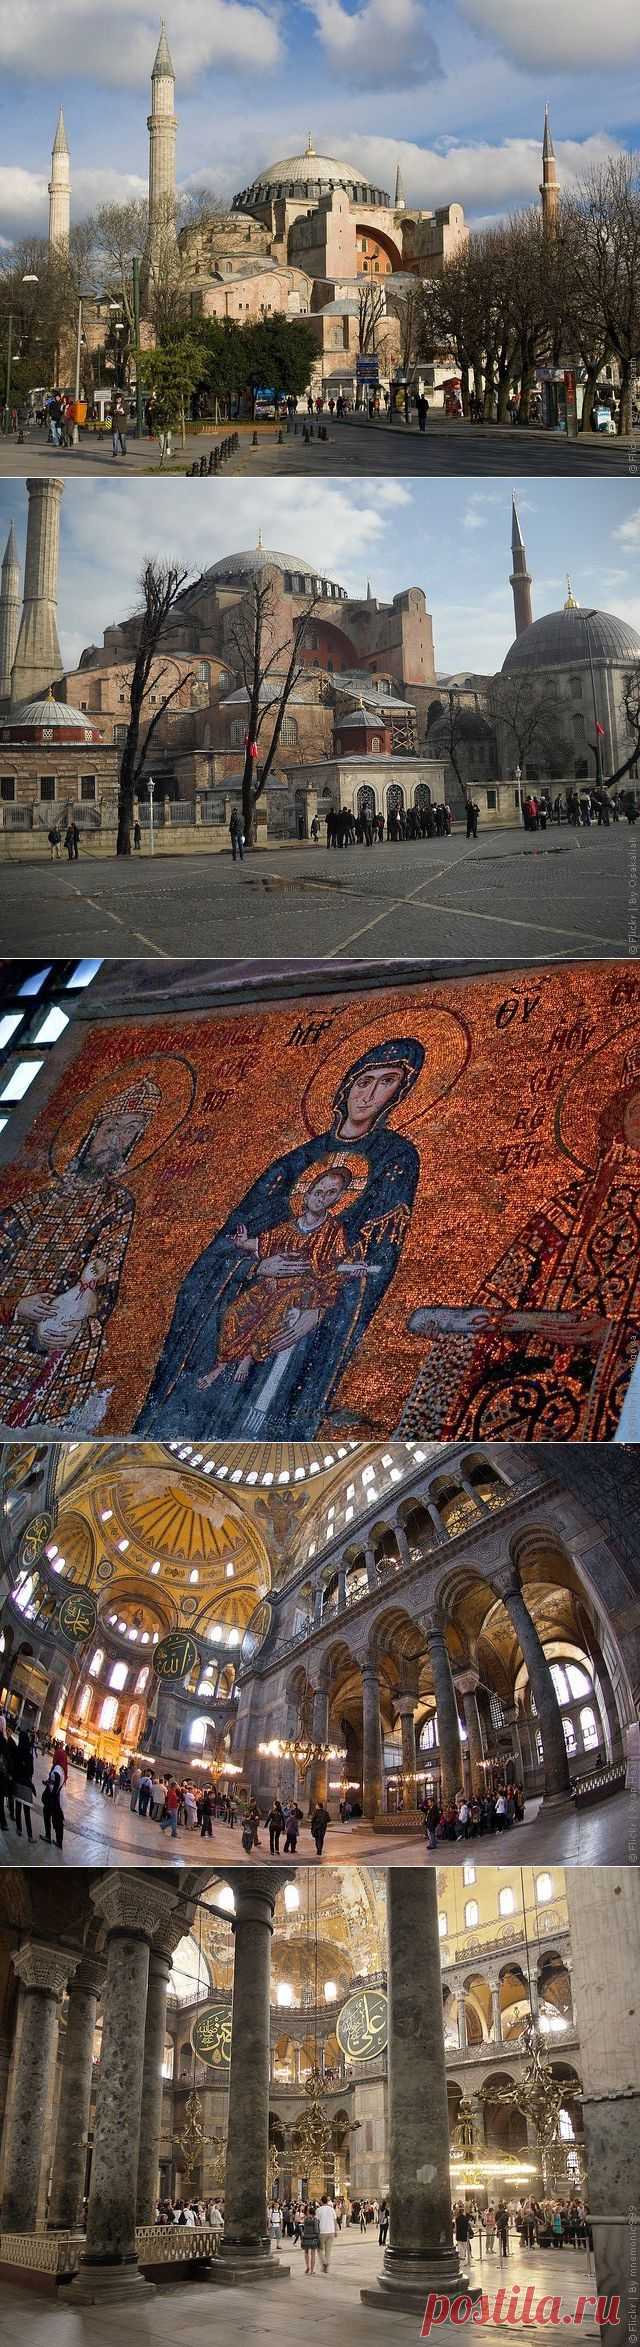 Собор Святой Софии в Стамбуле, фото и описание собора